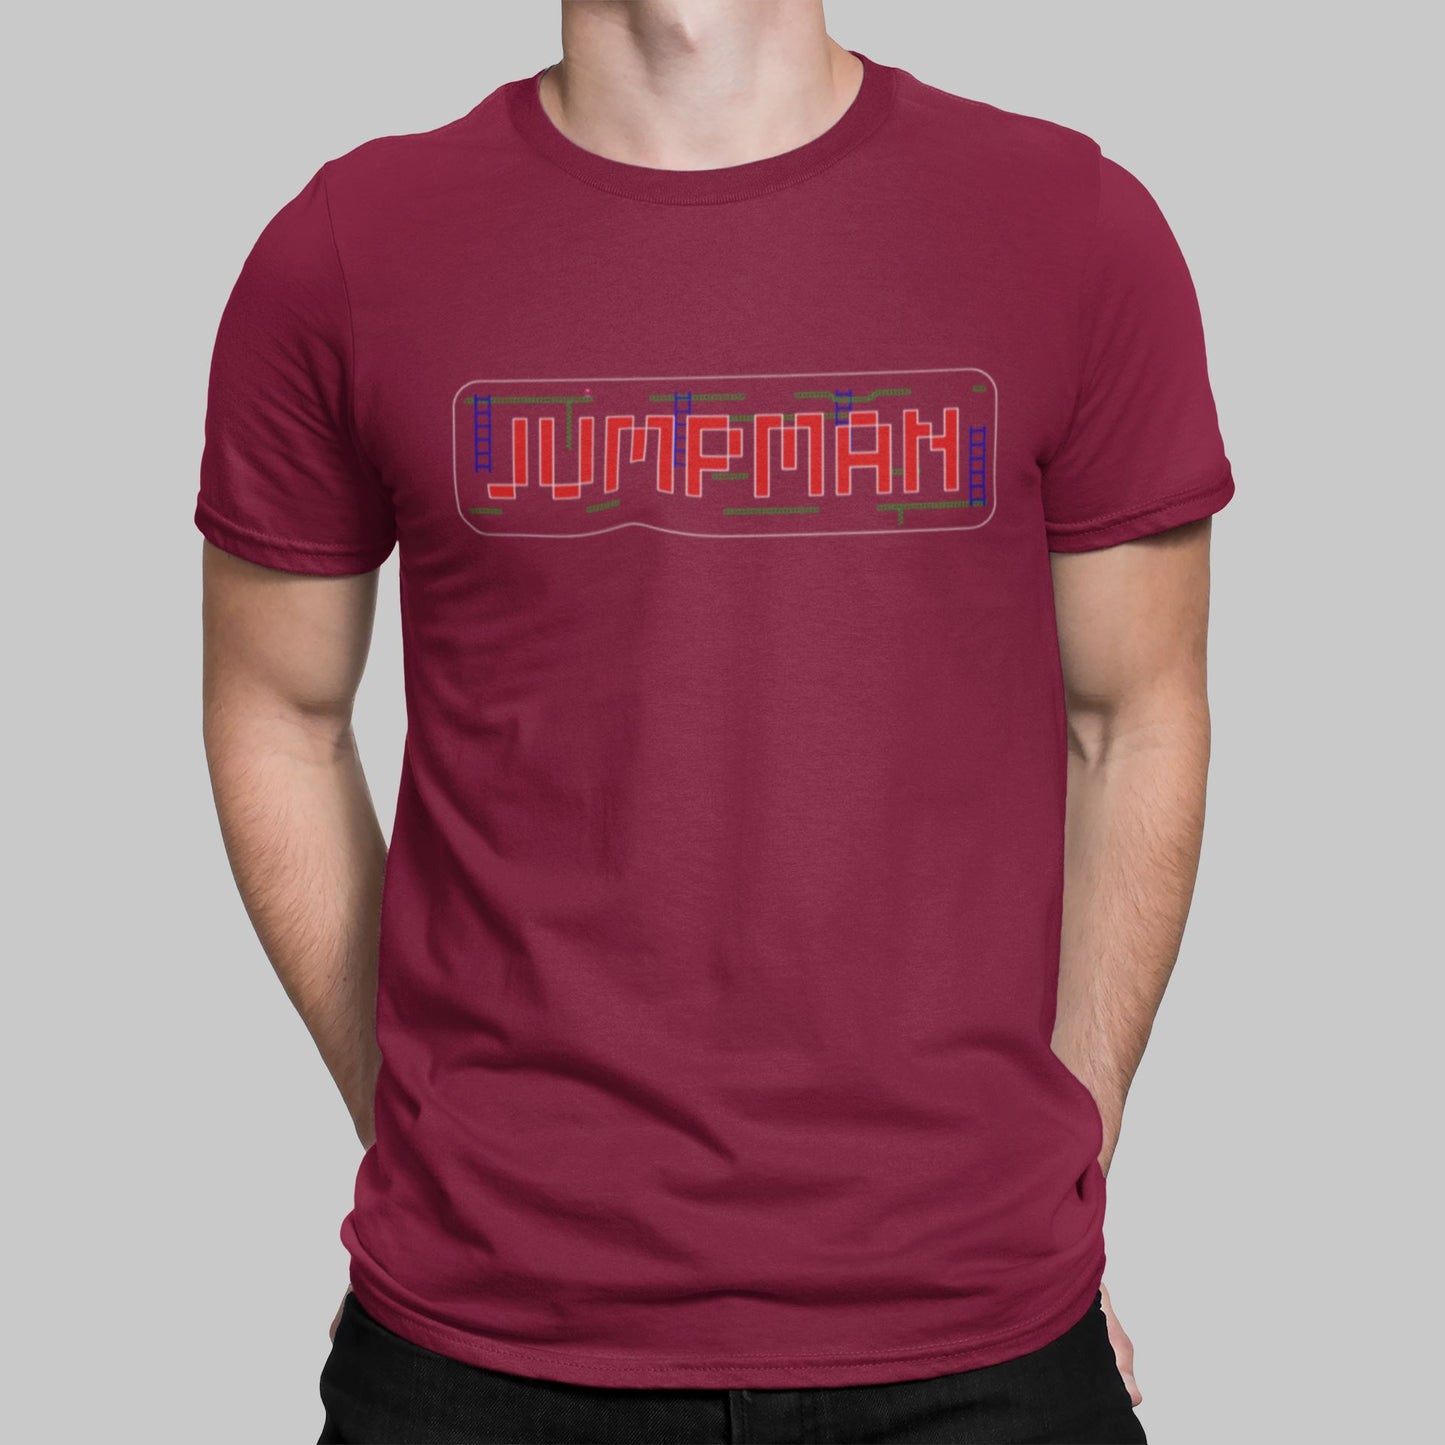 Jumpman Retro Gaming T-Shirt T-Shirt Seven Squared Small 34-36" Cardinal Red 